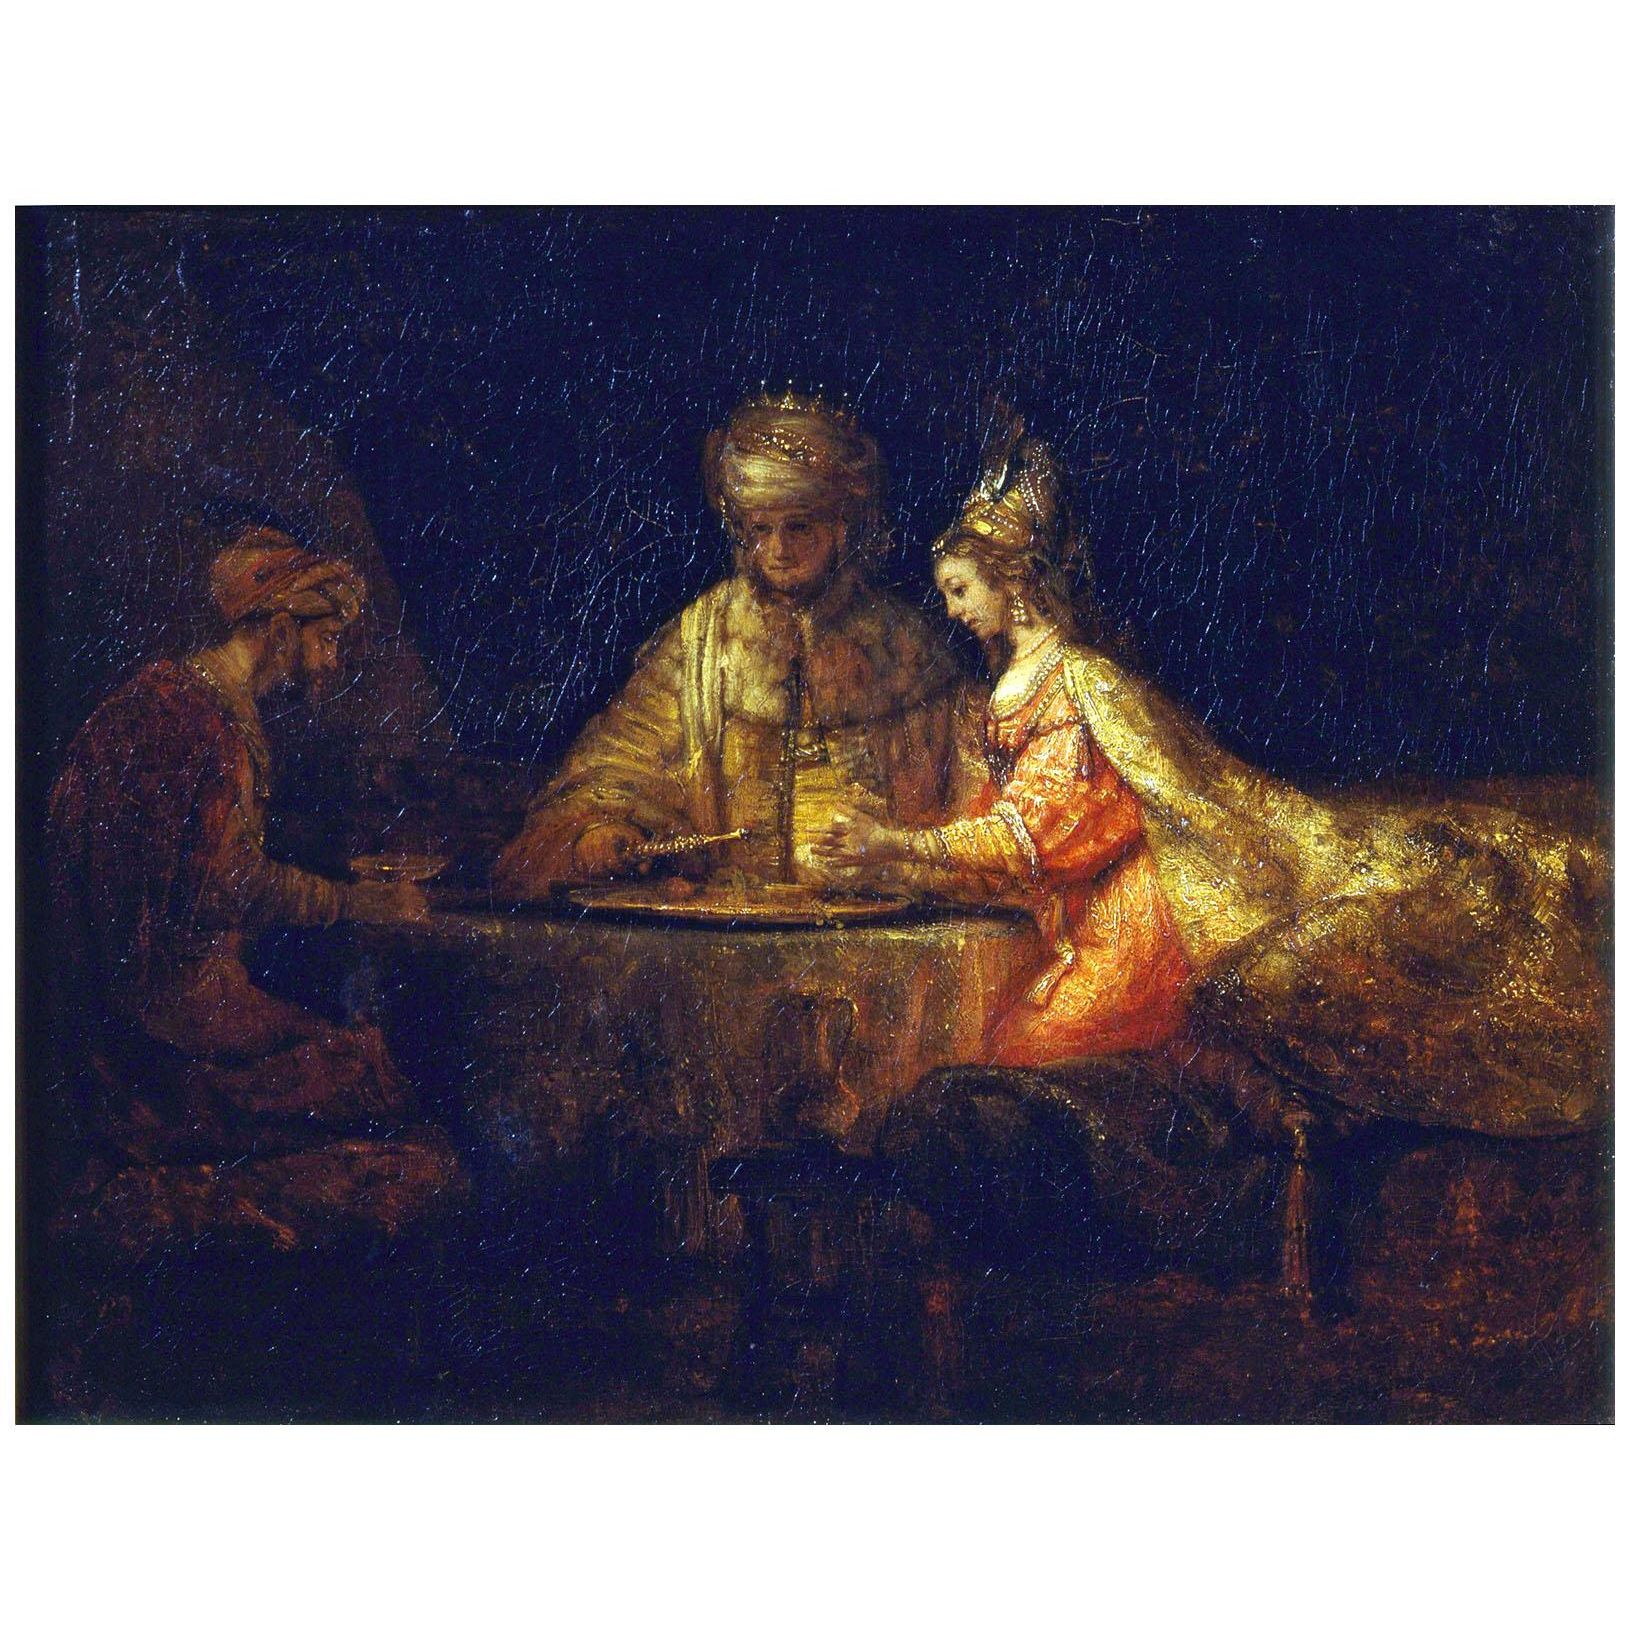 Rembrandt. Ahasuerus, Haman and Esther. 1660. Pushkin Museum